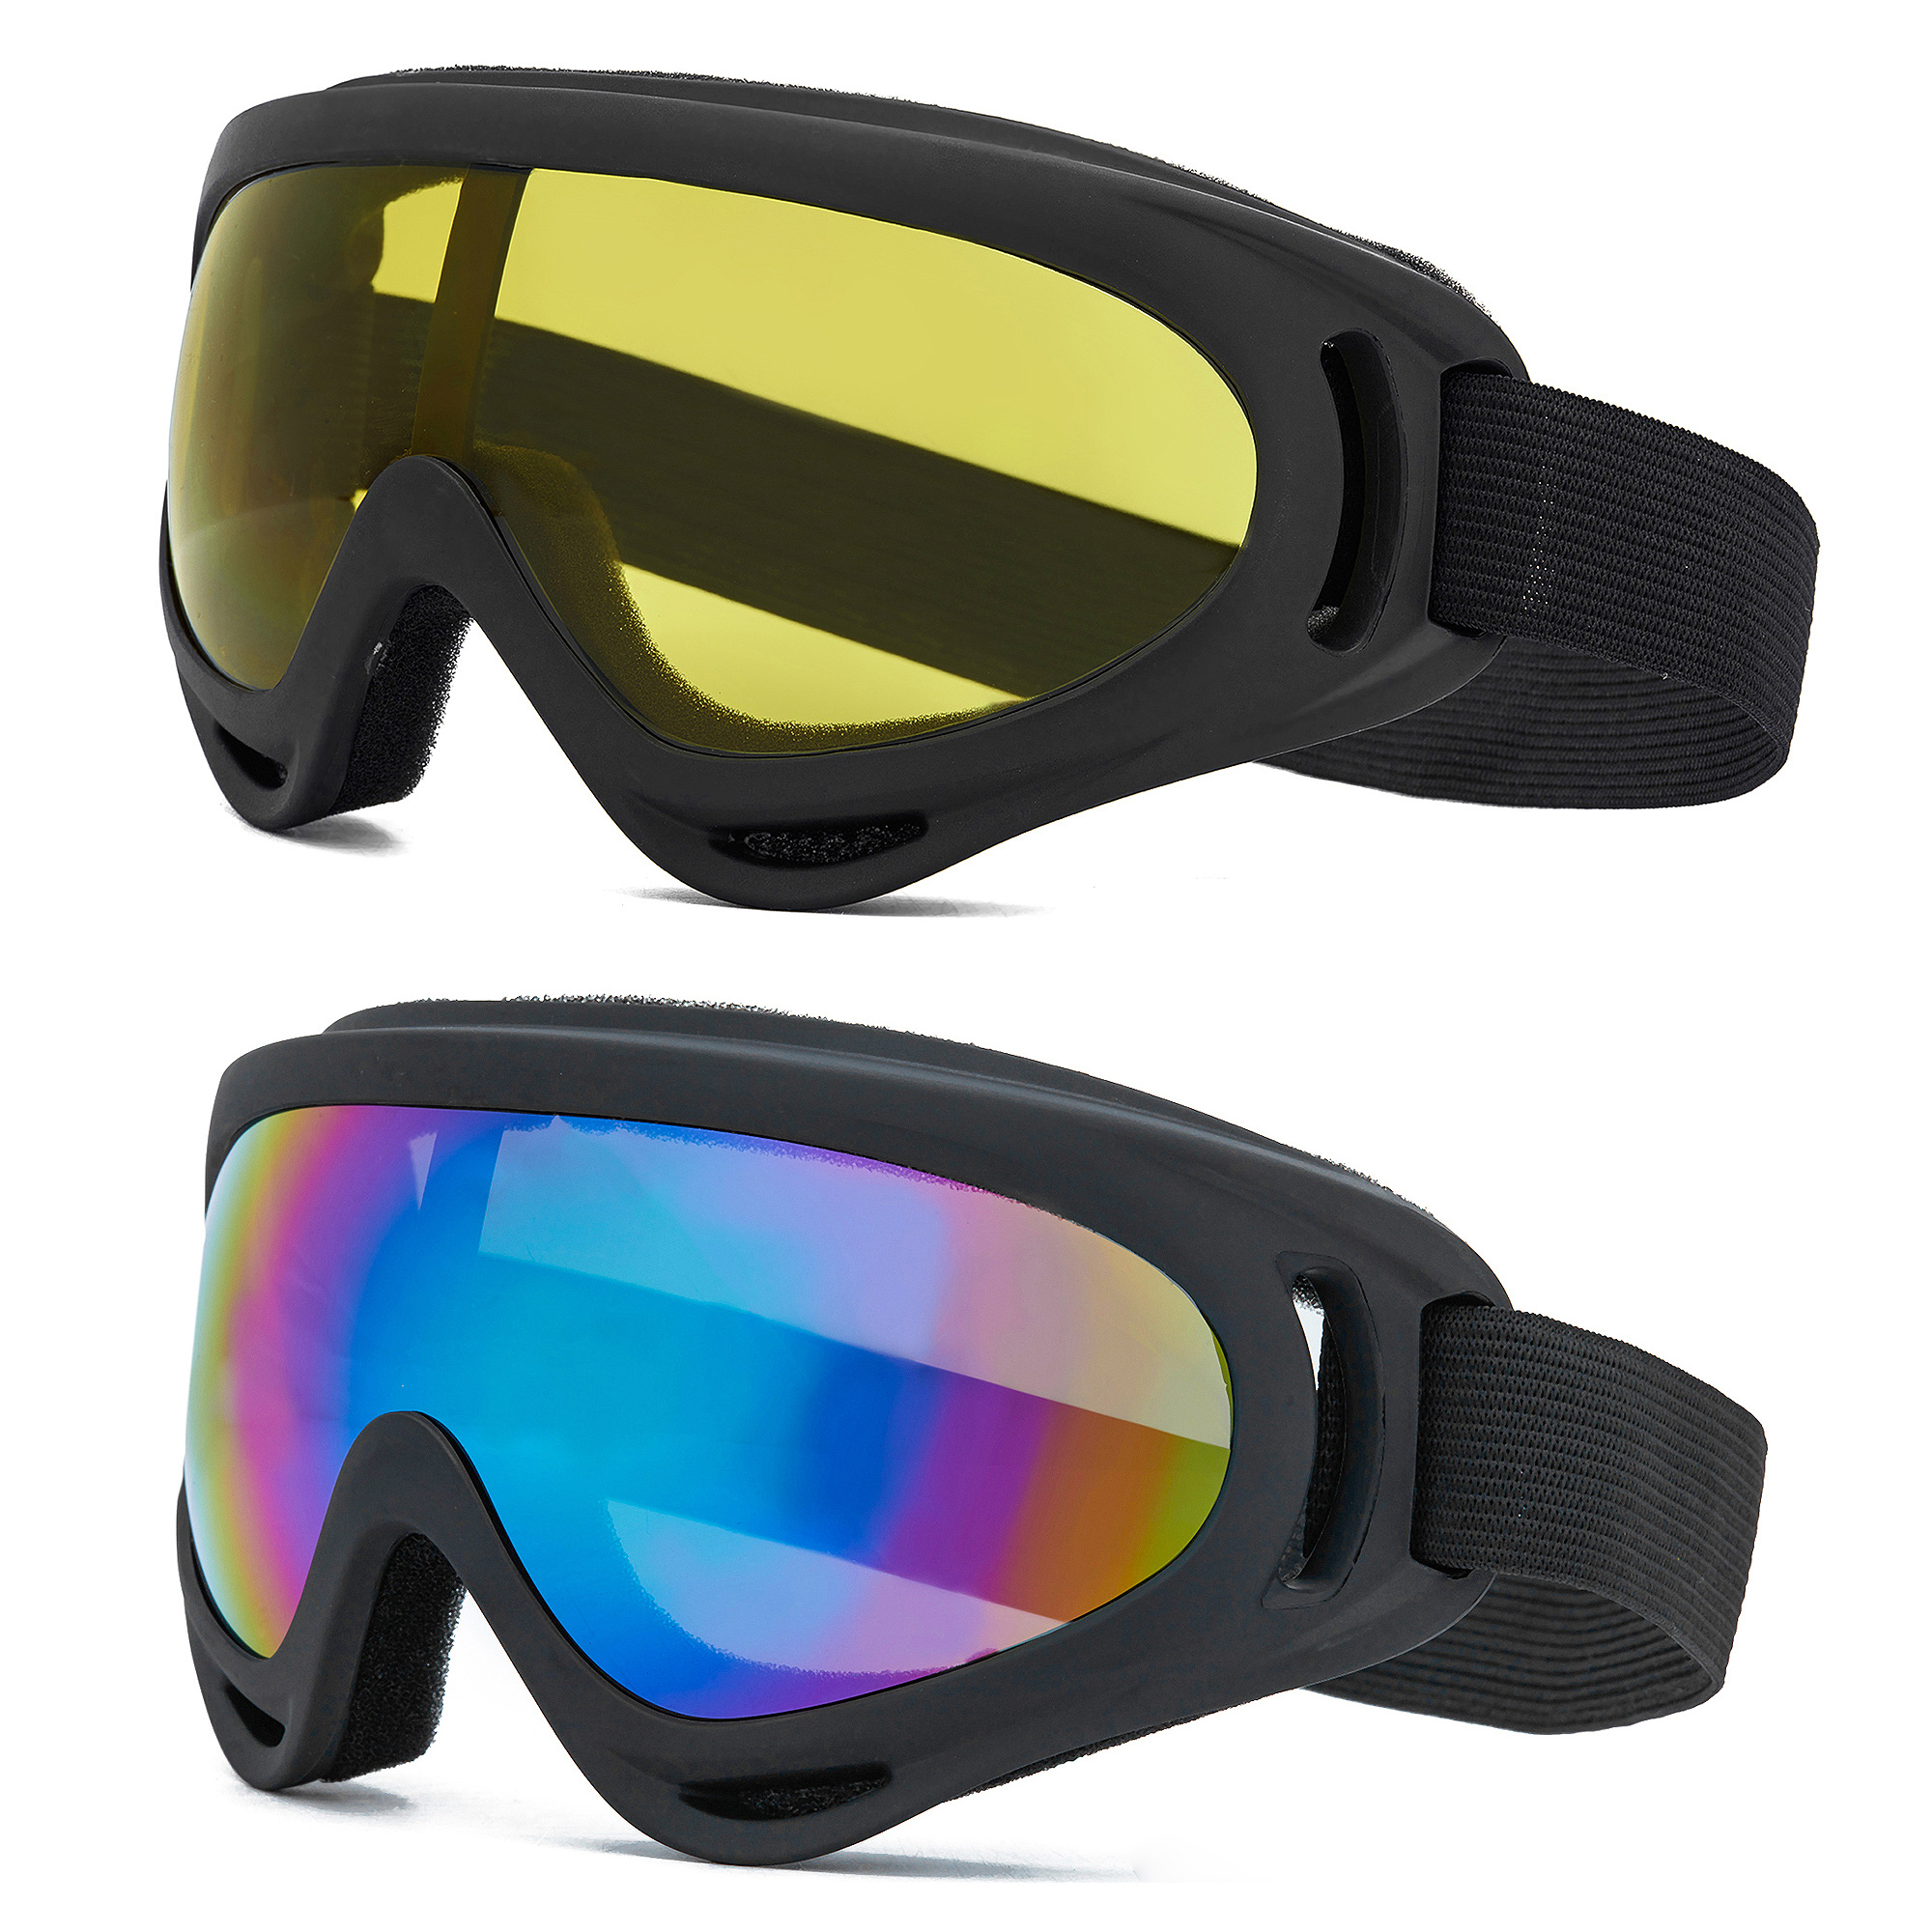 YouLoveIt Ski Goggles, 2 Pack Ski Glasses Snowboard Motobike Goggles Ski/Snowboard Goggles Motorcycle Bicycle Glasses Men Women Snow Goggles Glasses, Anti-Glare Lenses - image 1 of 8